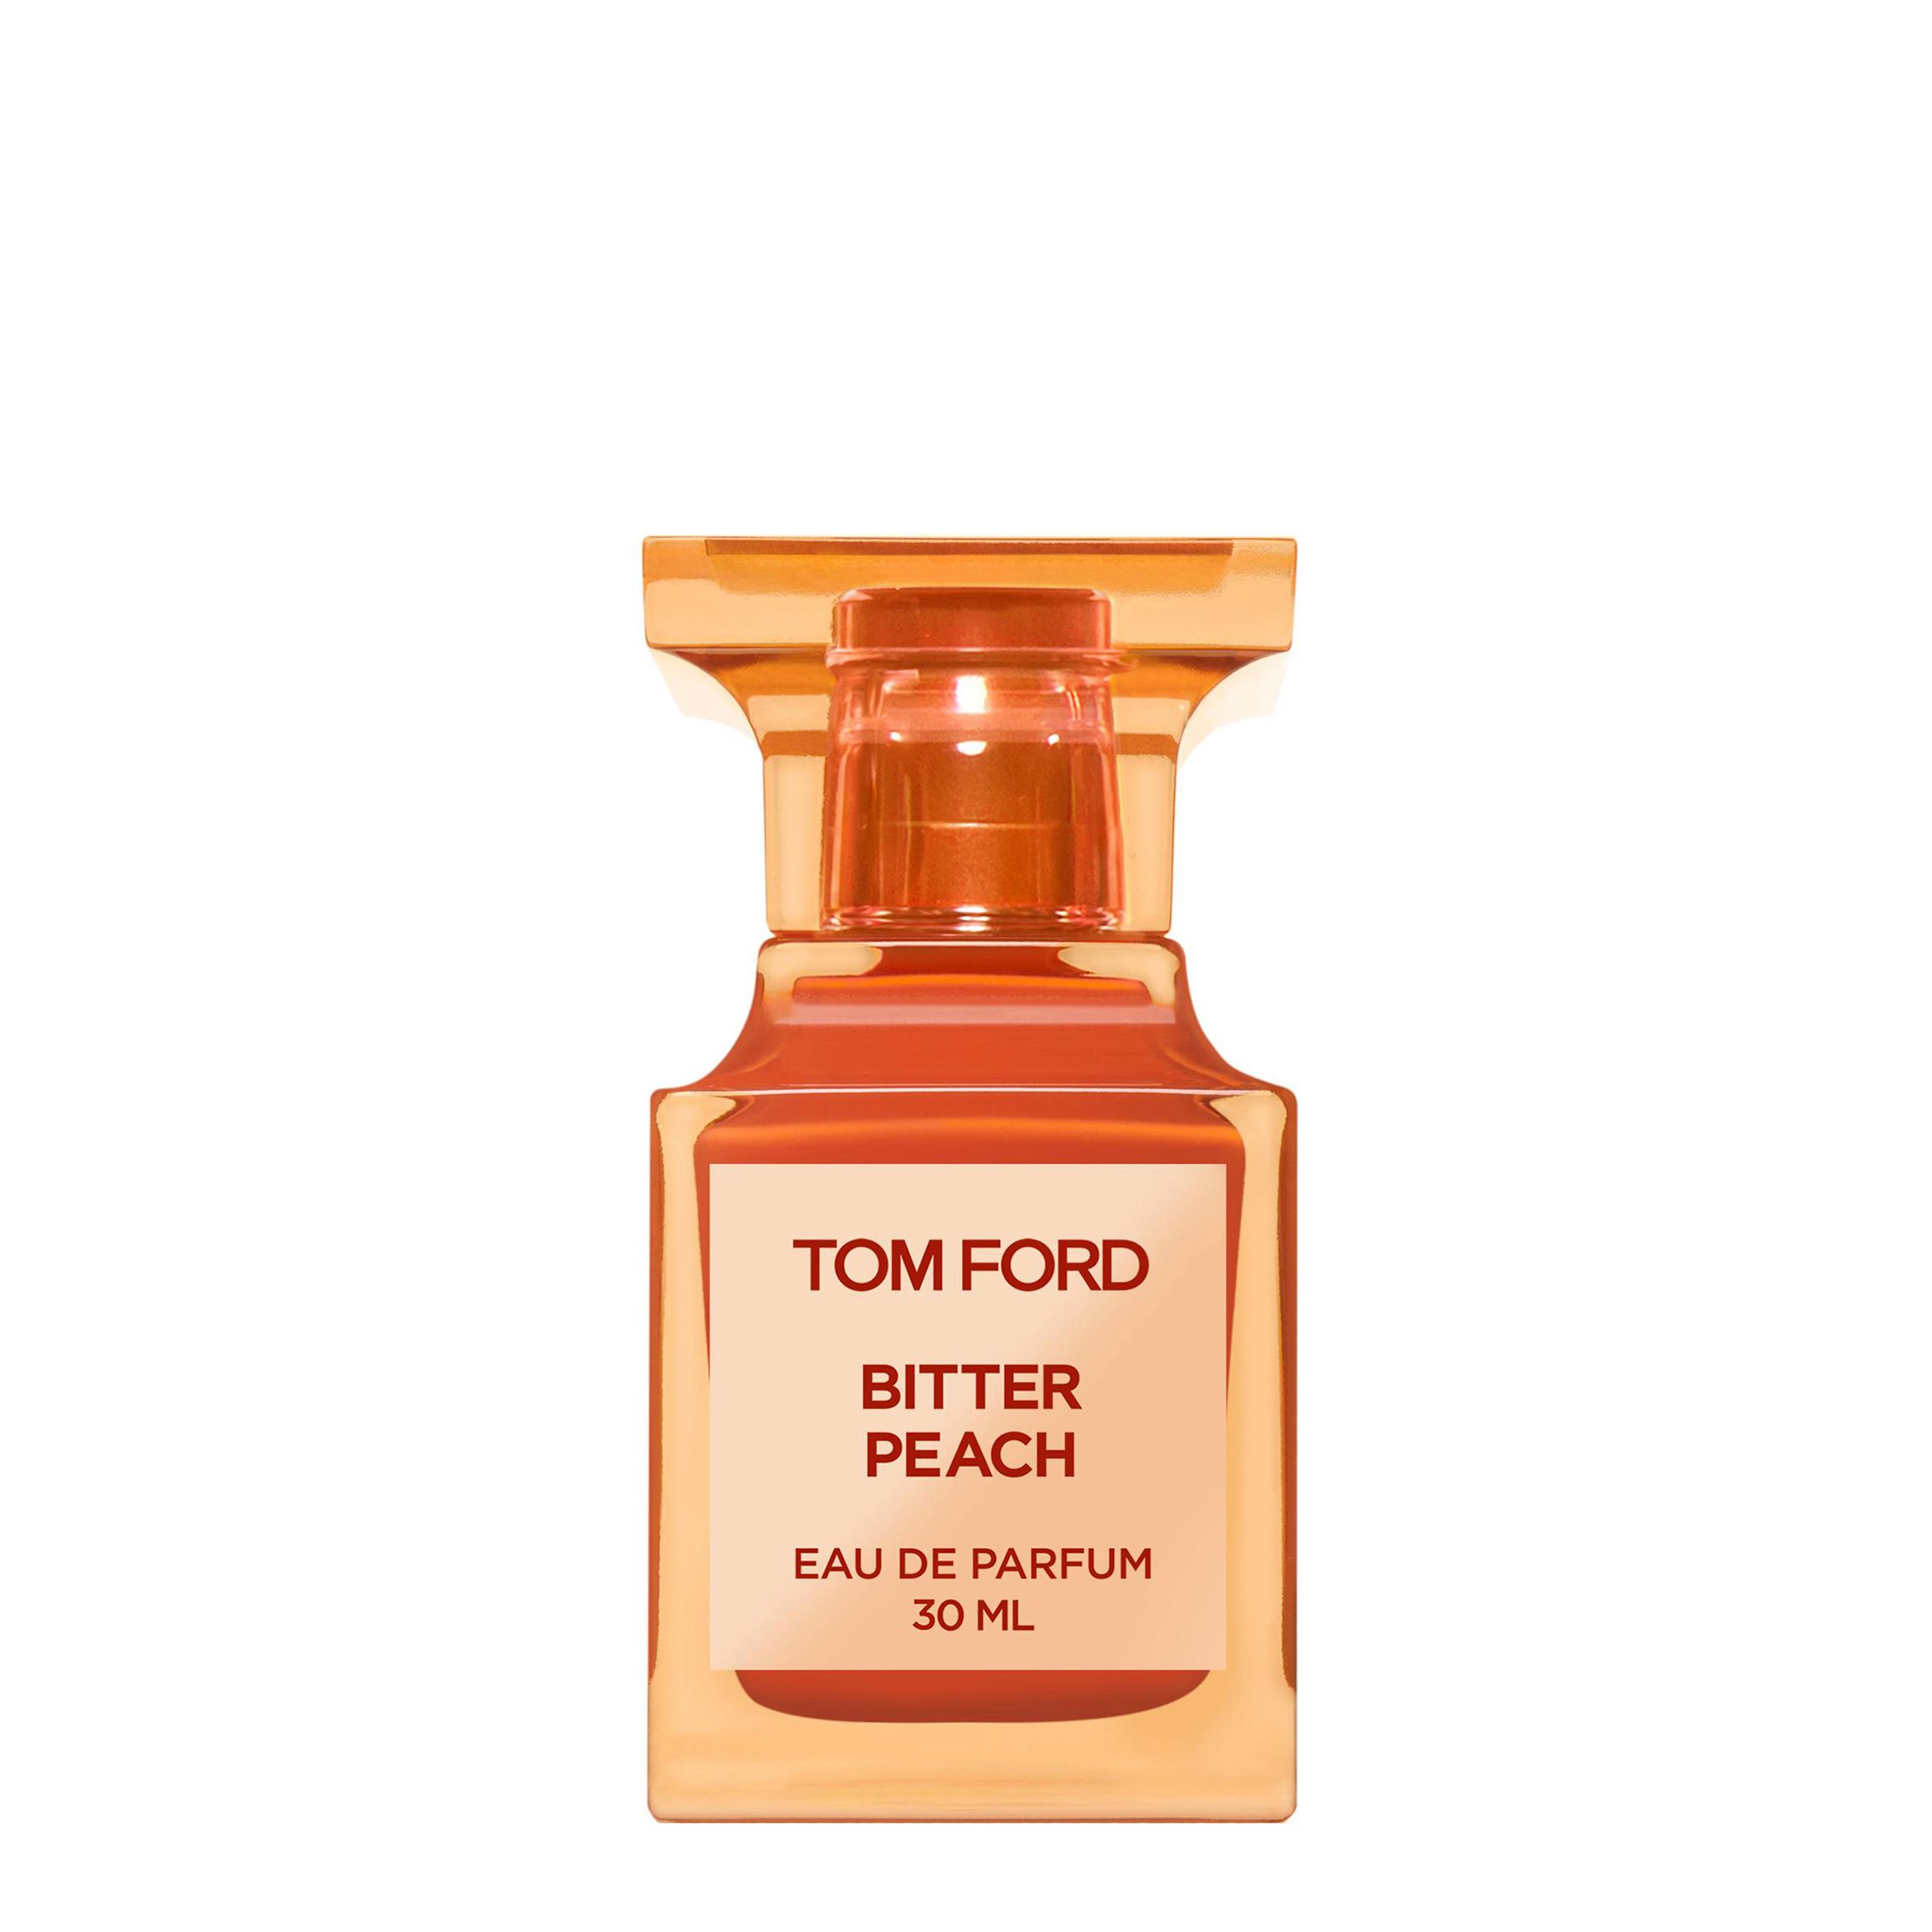 Вода парфюмерная Tom Ford Bitter Peach, унисекс, 30 мл tom ford bitter peach 50